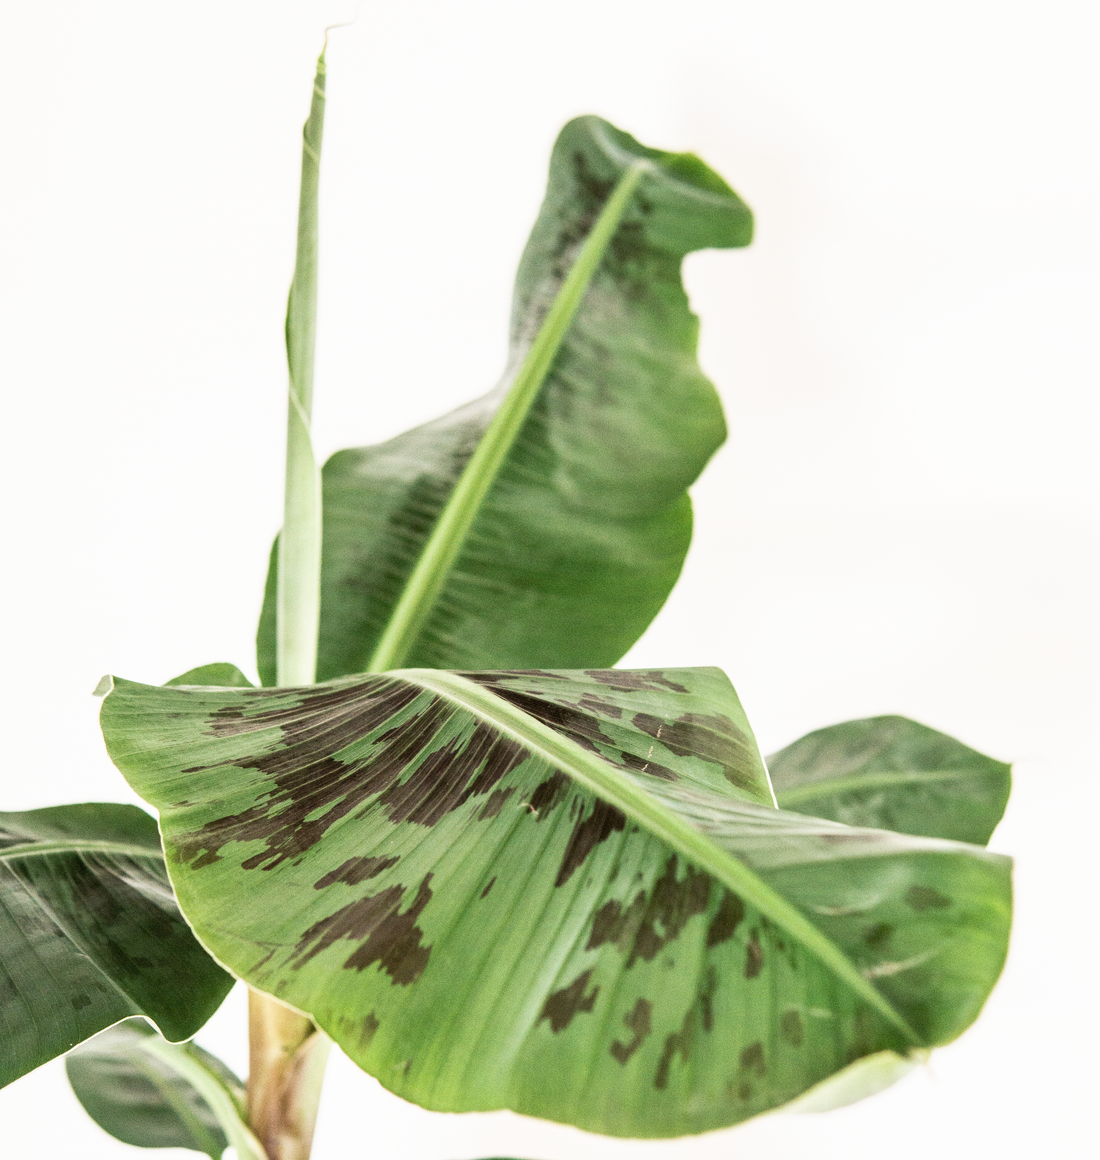 bananenplant musa aciminata kamerplant zaad blad steen schaar zaden groeein video